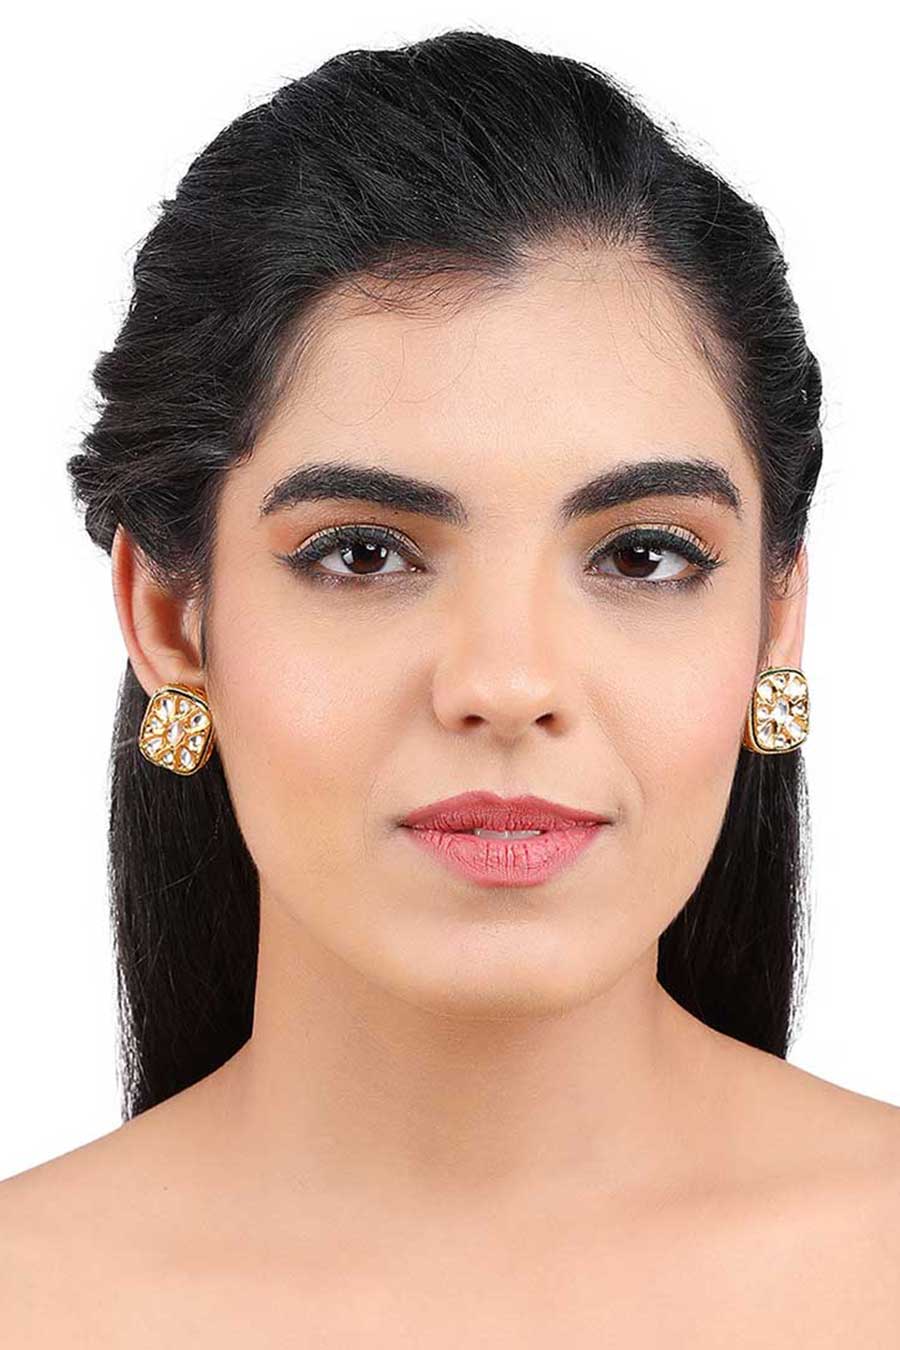 Gold Bali Earring at Rs 5000/gram in Mumbai | ID: 15178941288